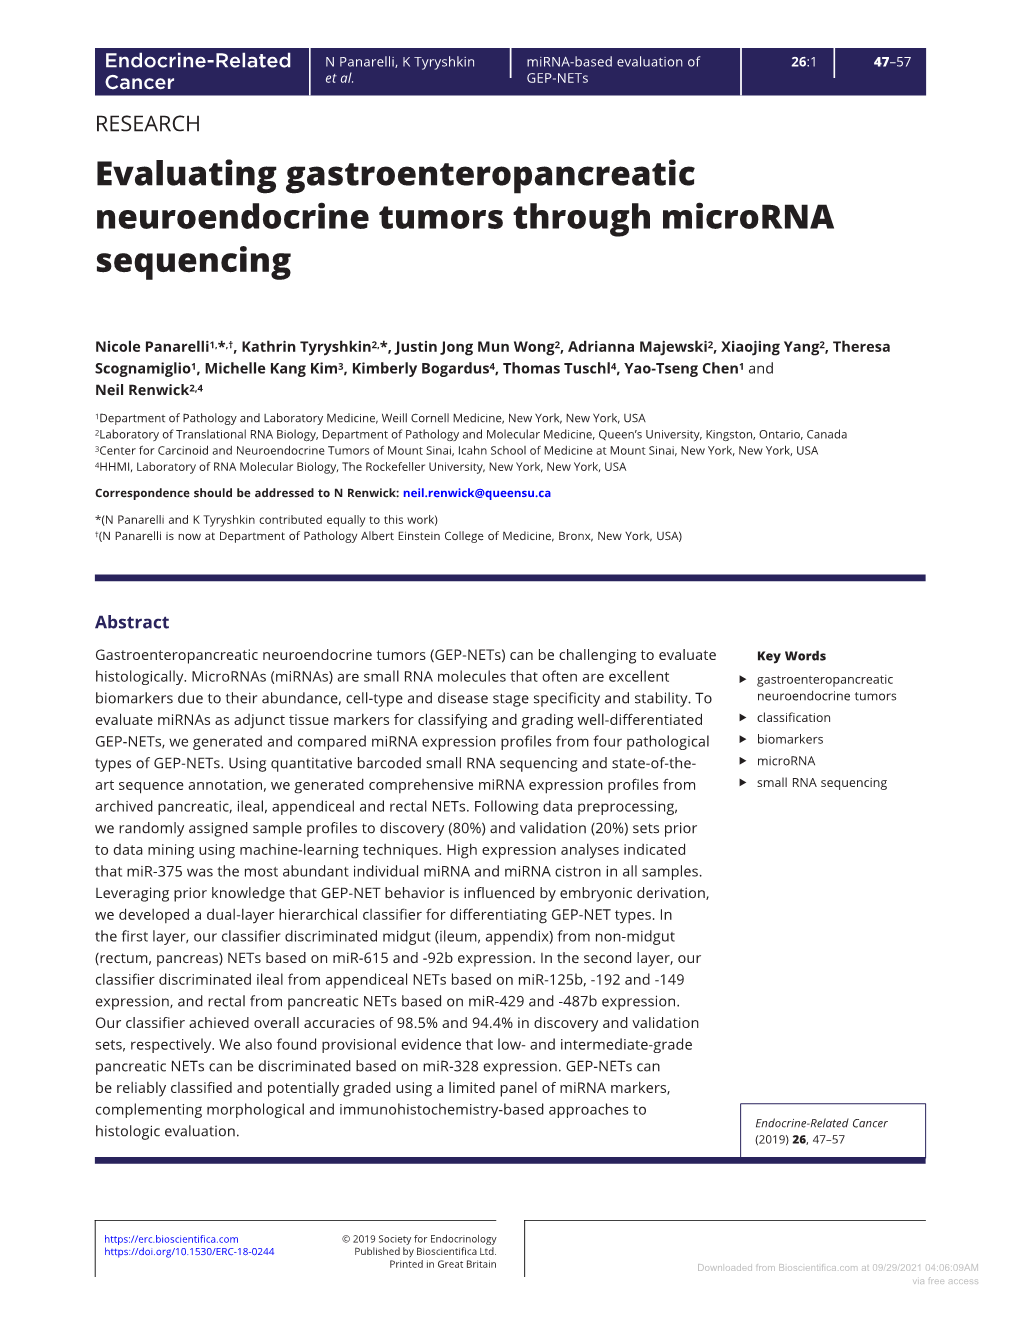 Evaluating Gastroenteropancreatic Neuroendocrine Tumors Through Microrna Sequencing